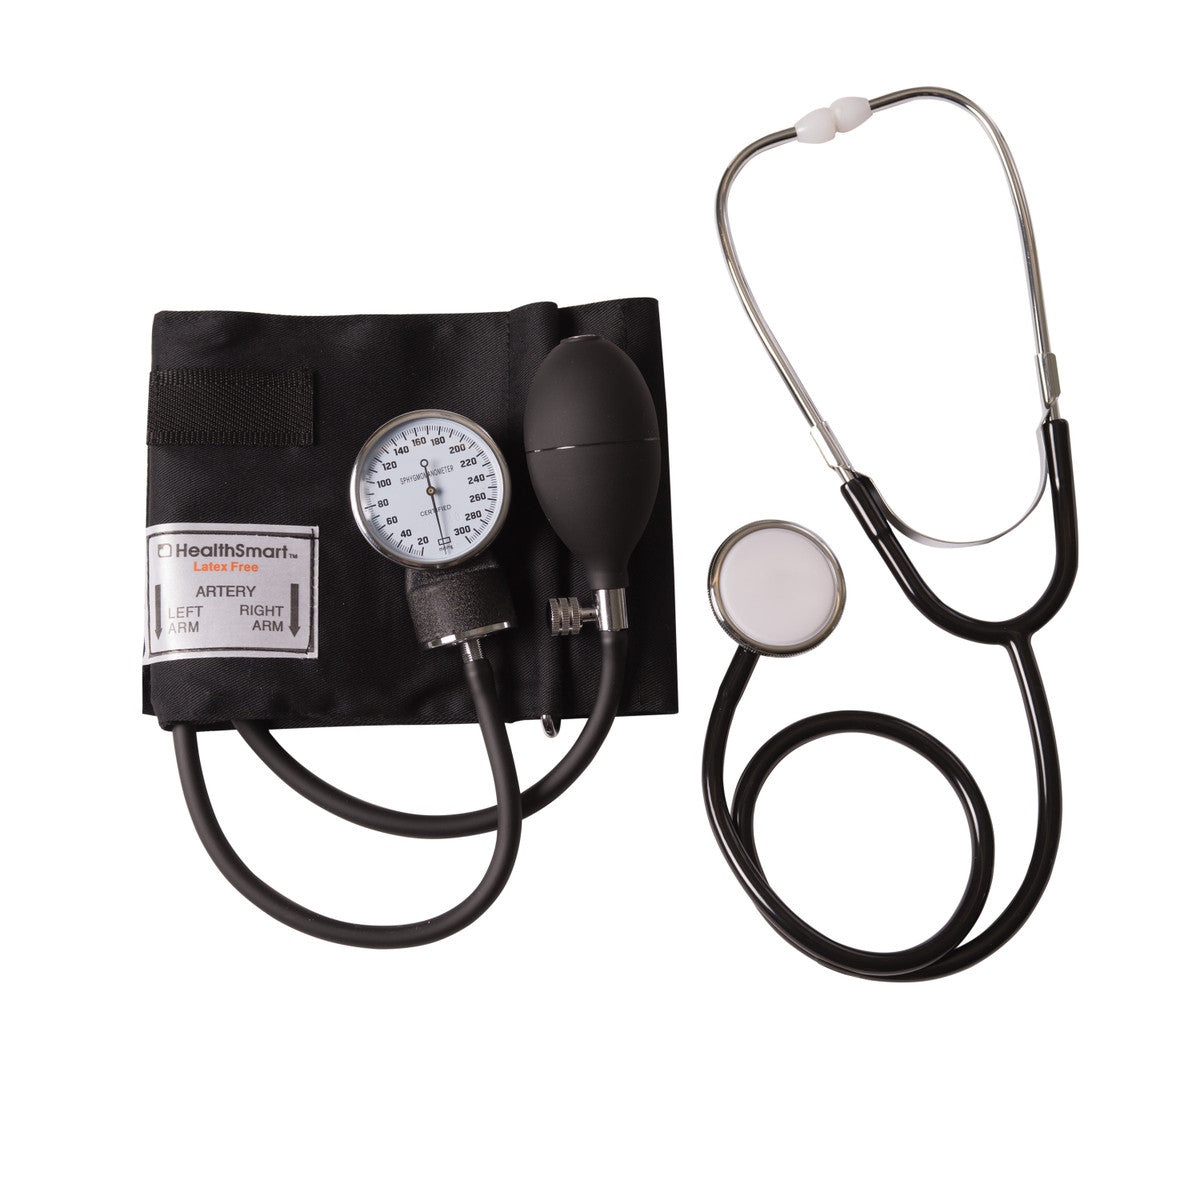 HealthSmart Premium Series Digital Blood Pressure Monitor